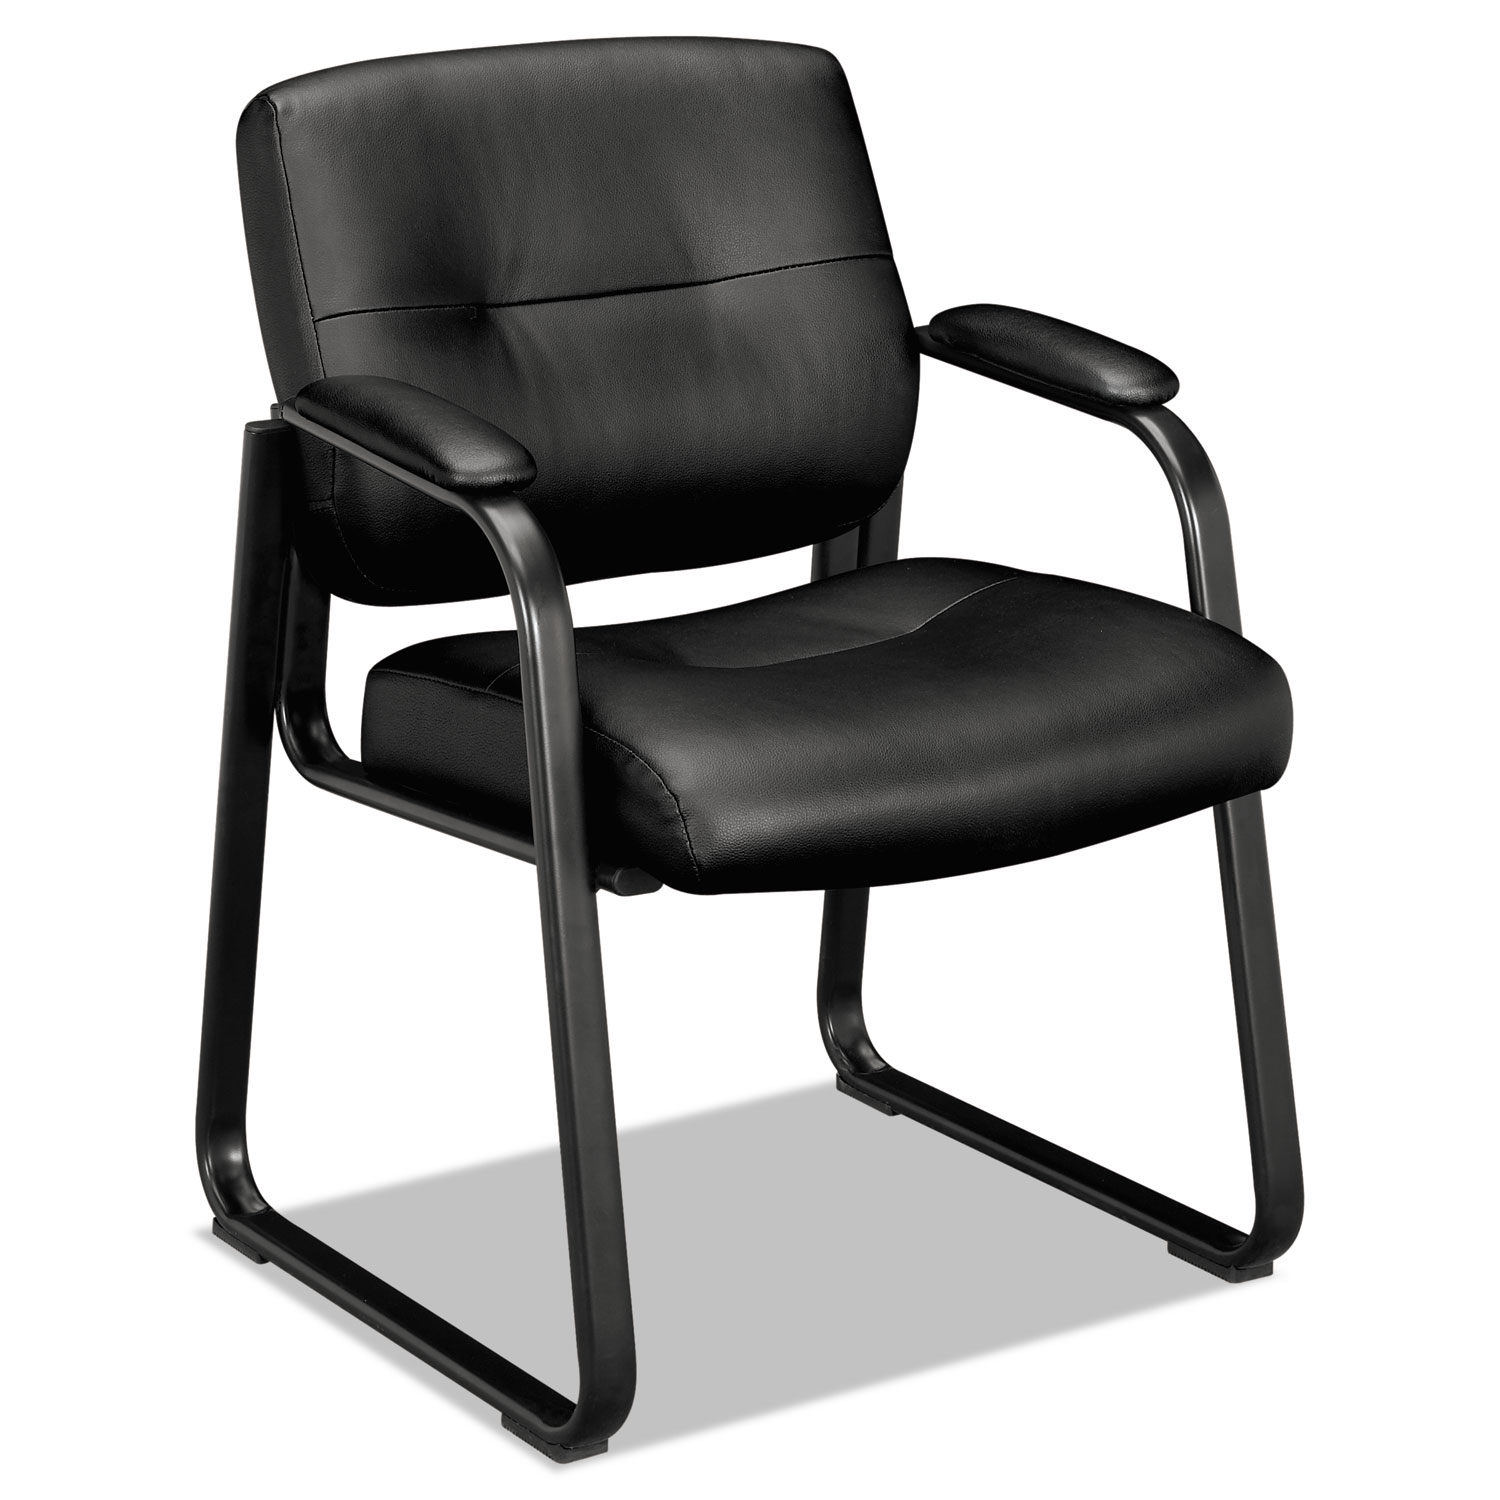  HON HVL693.SB11 VL690 Series Guest Chair, 24.75 x 26 x 33.5, Black Seat/Black Back, Black Base (BSXVL693SB11) 